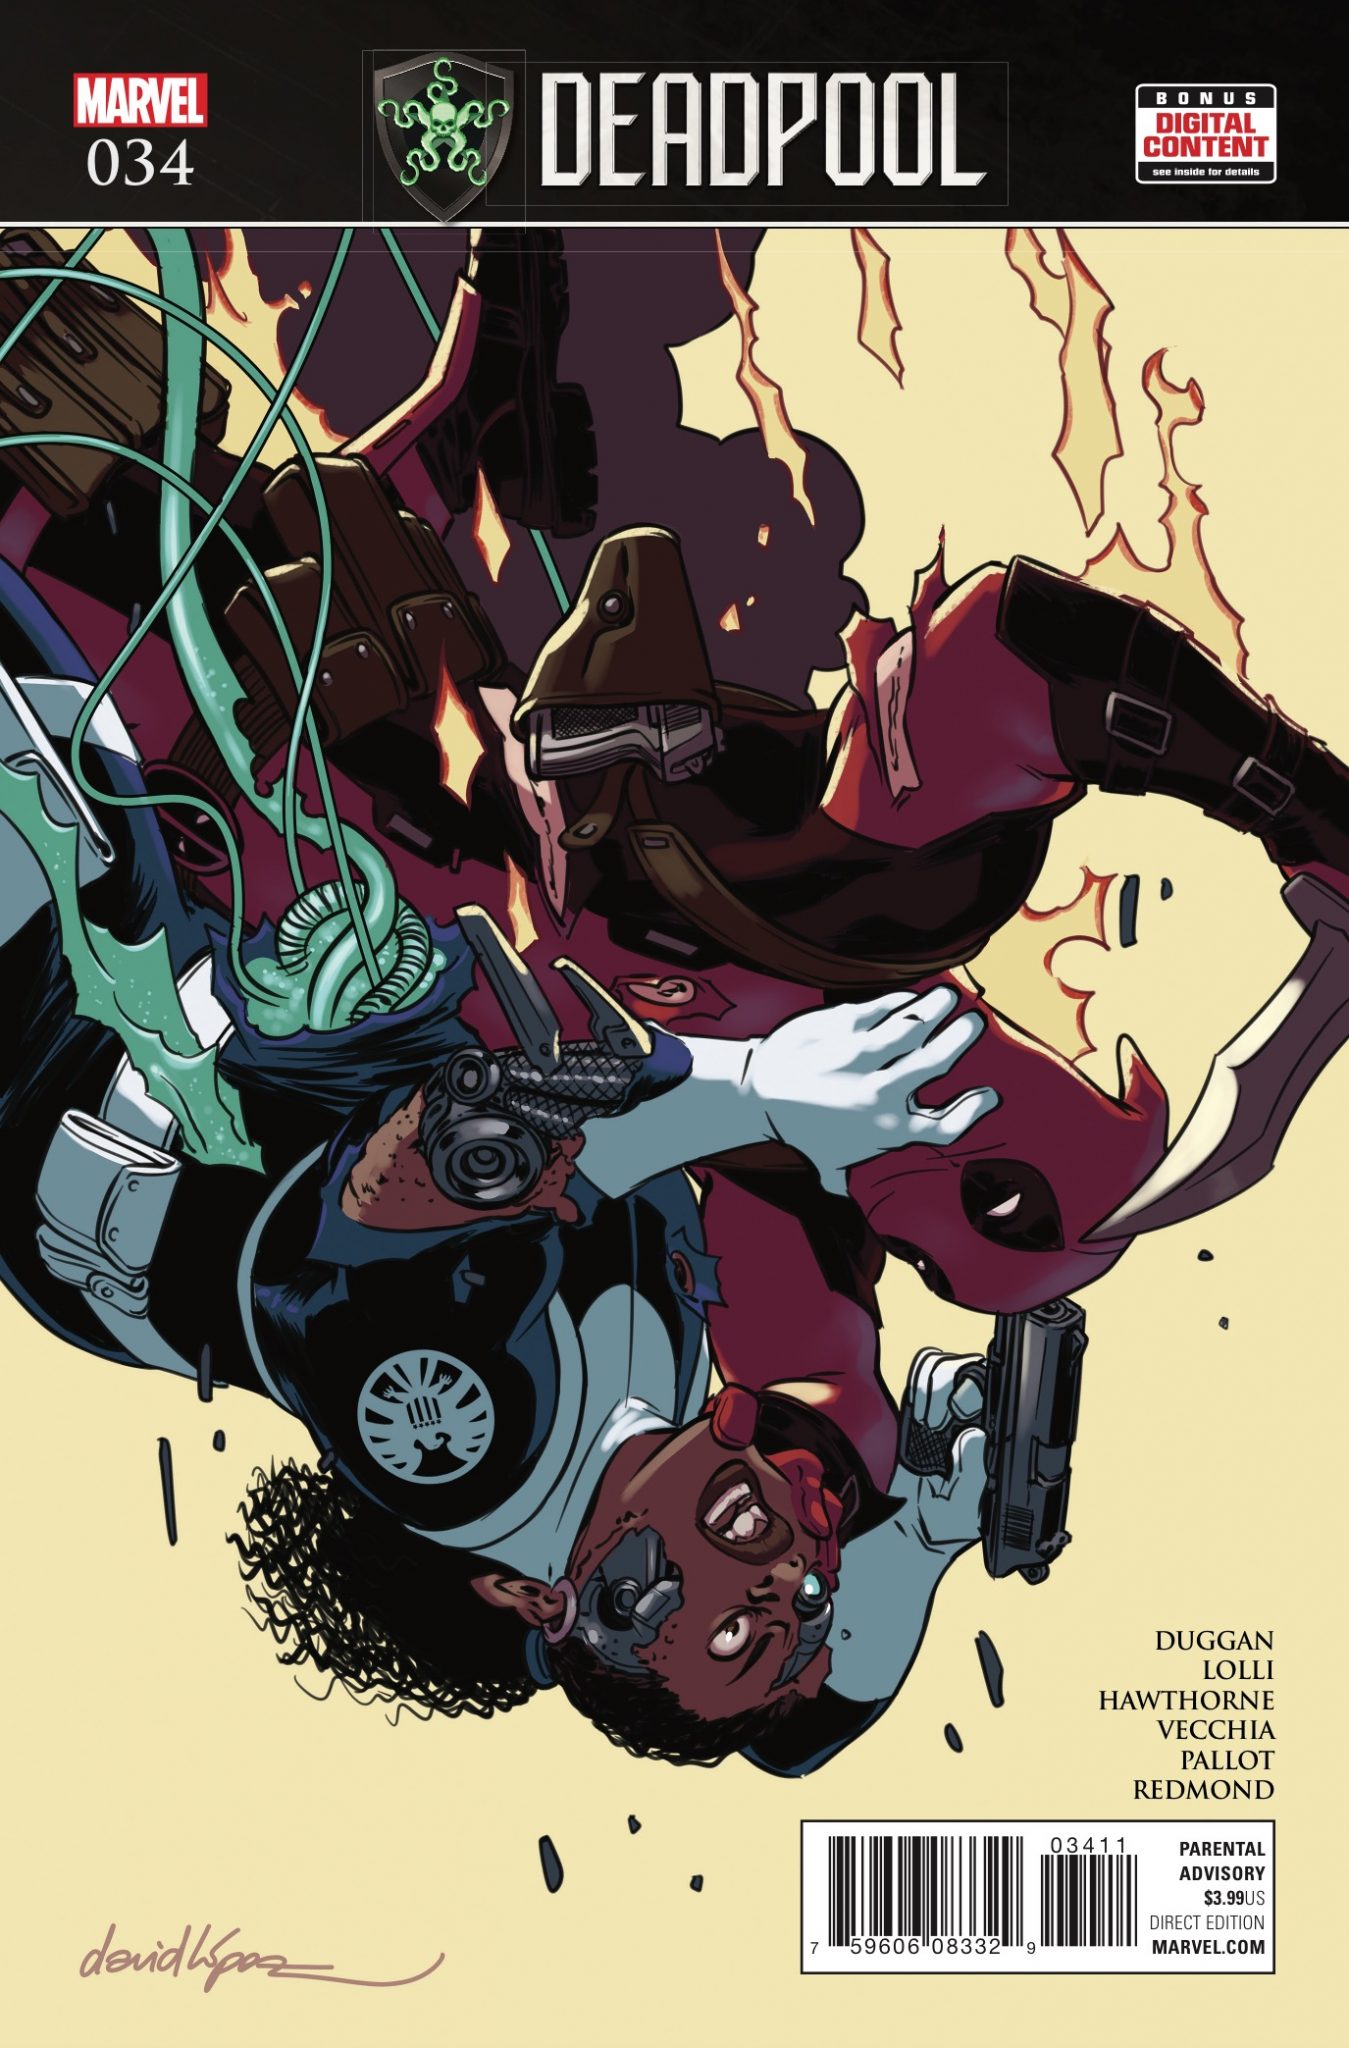 Deadpool #34 Review